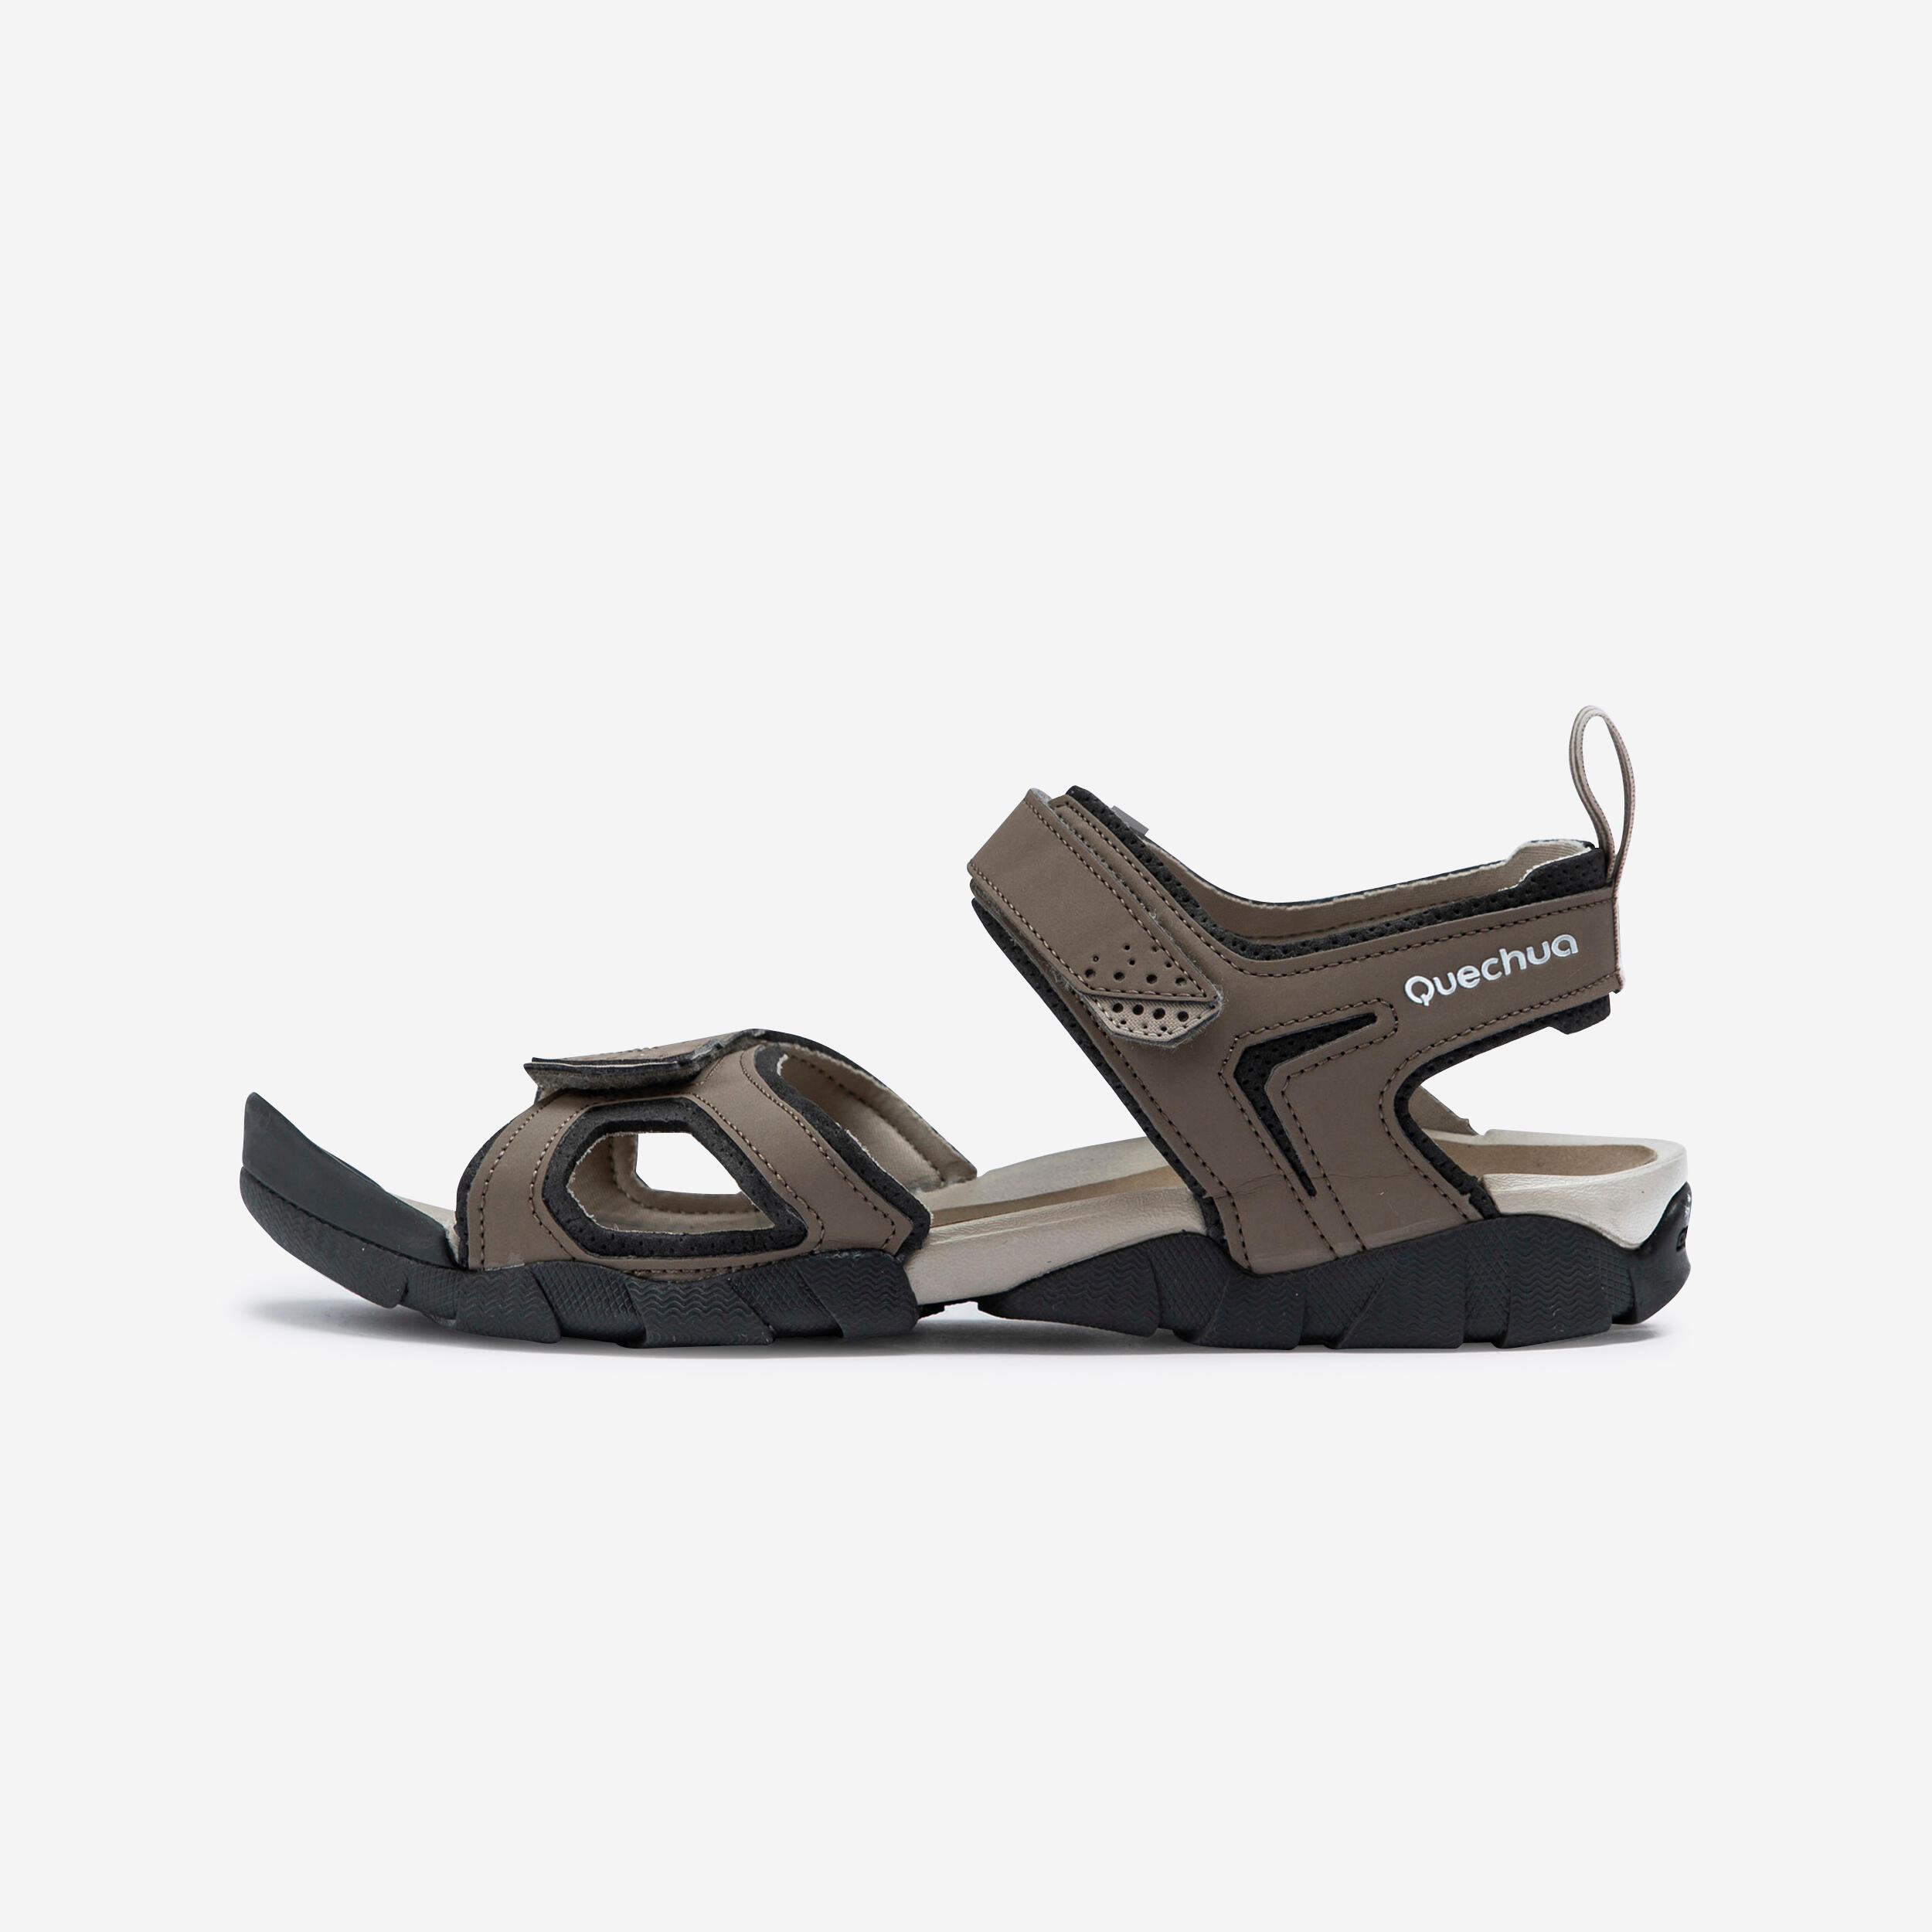 Bata mens Glance Sd Black Sandal - 7 UK (8616436) : Amazon.in: Fashion